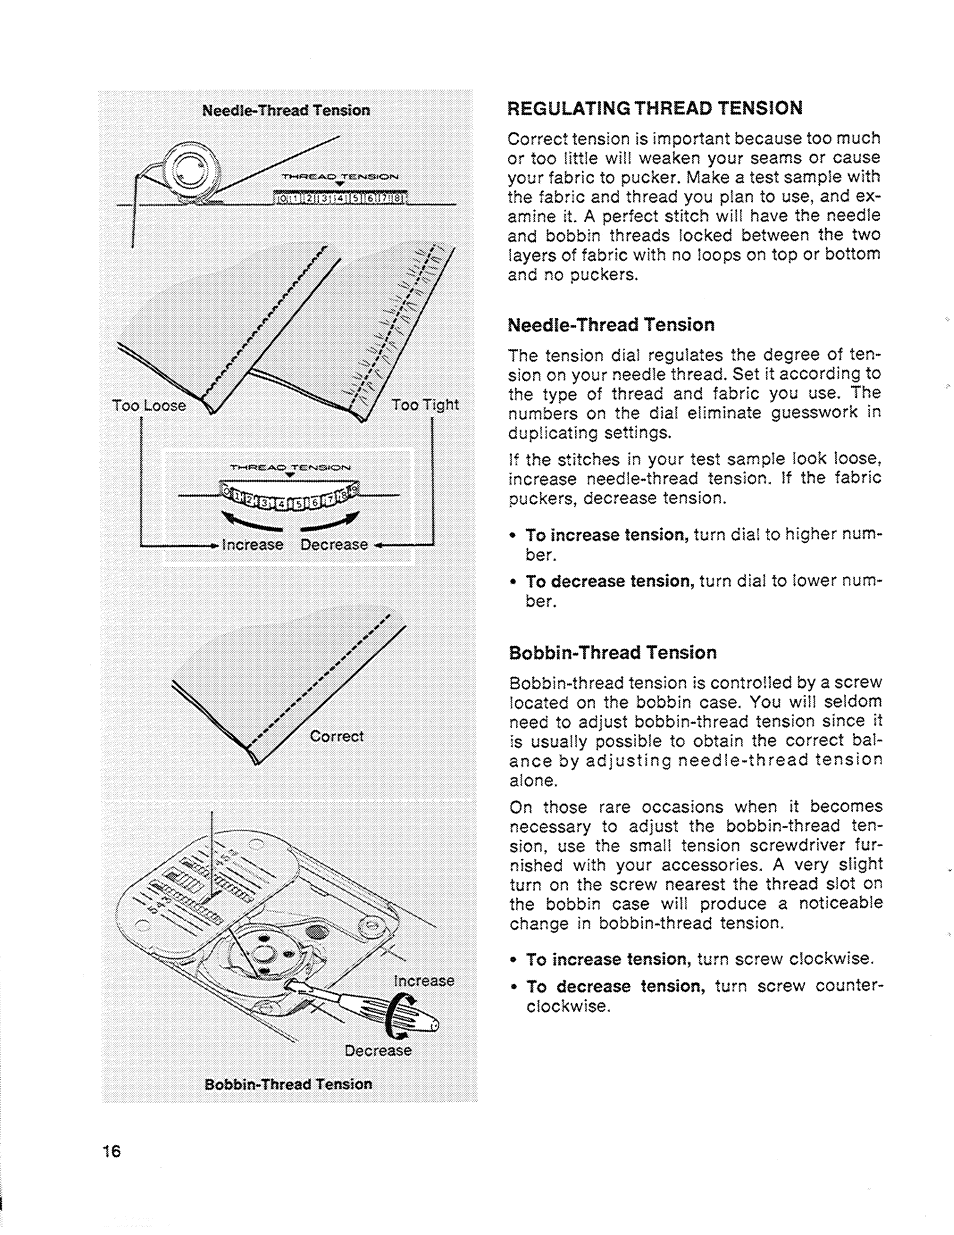 Regulating thread tension, Needfe-ttiread tension, Bobbin-thread tension | SINGER 714 Graduate User Manual | Page 18 / 52